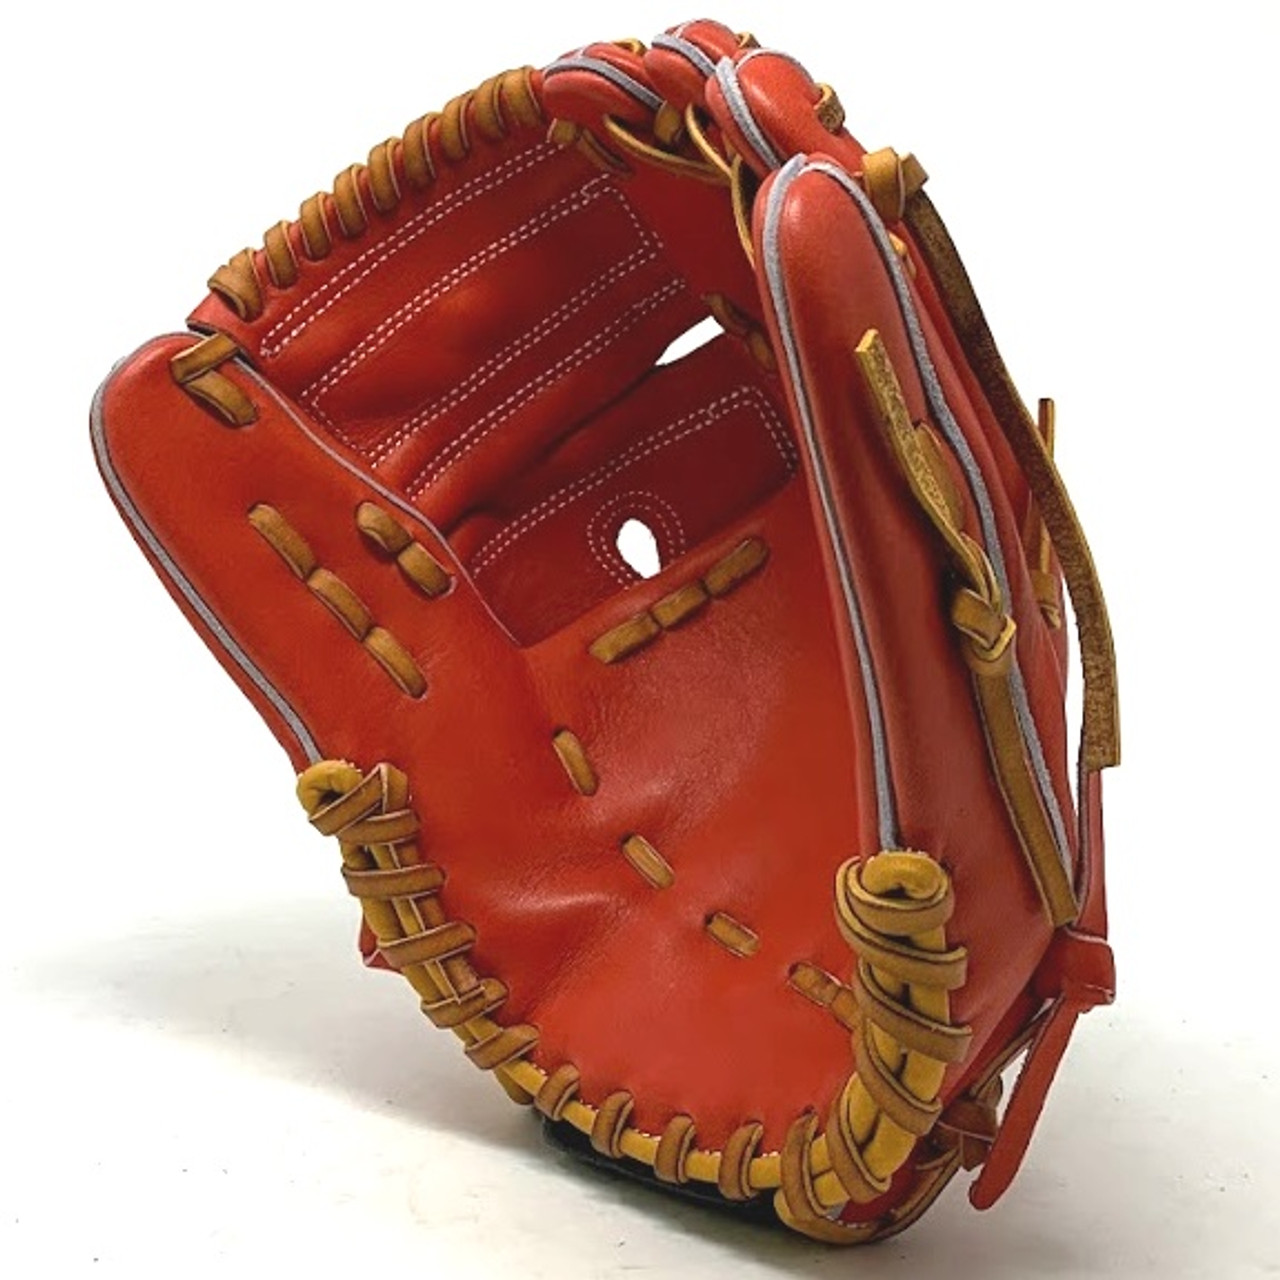 What is 12.5 Professional 44 Baseball Glove Custom Kip Leather